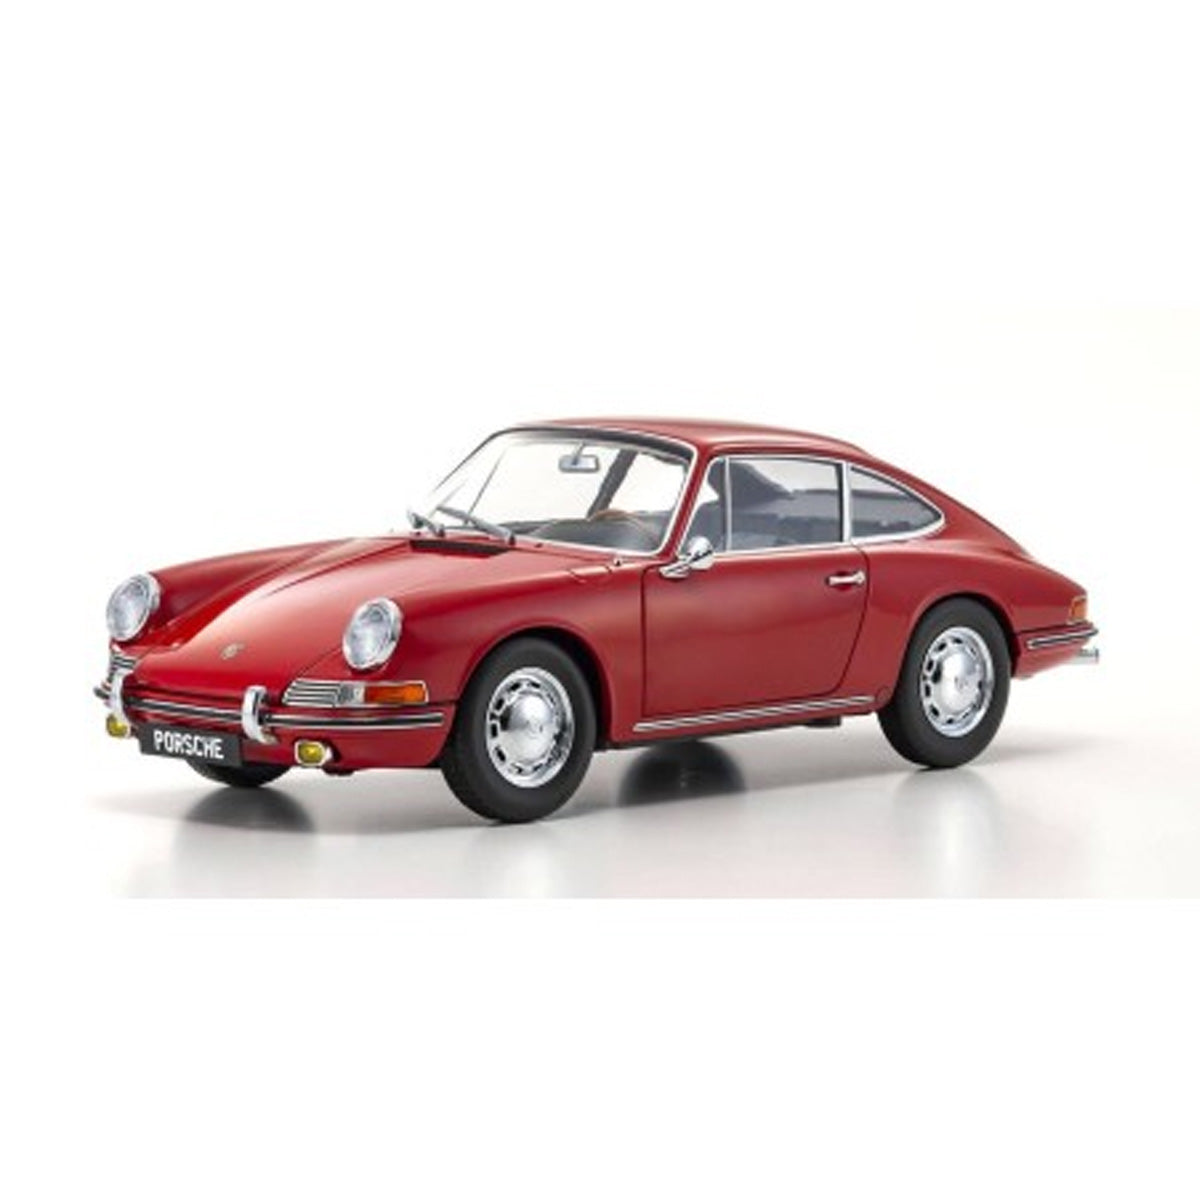 Porsche 911 (901) 1964 Signal Red - 1:18 Scale Diecast Model Car